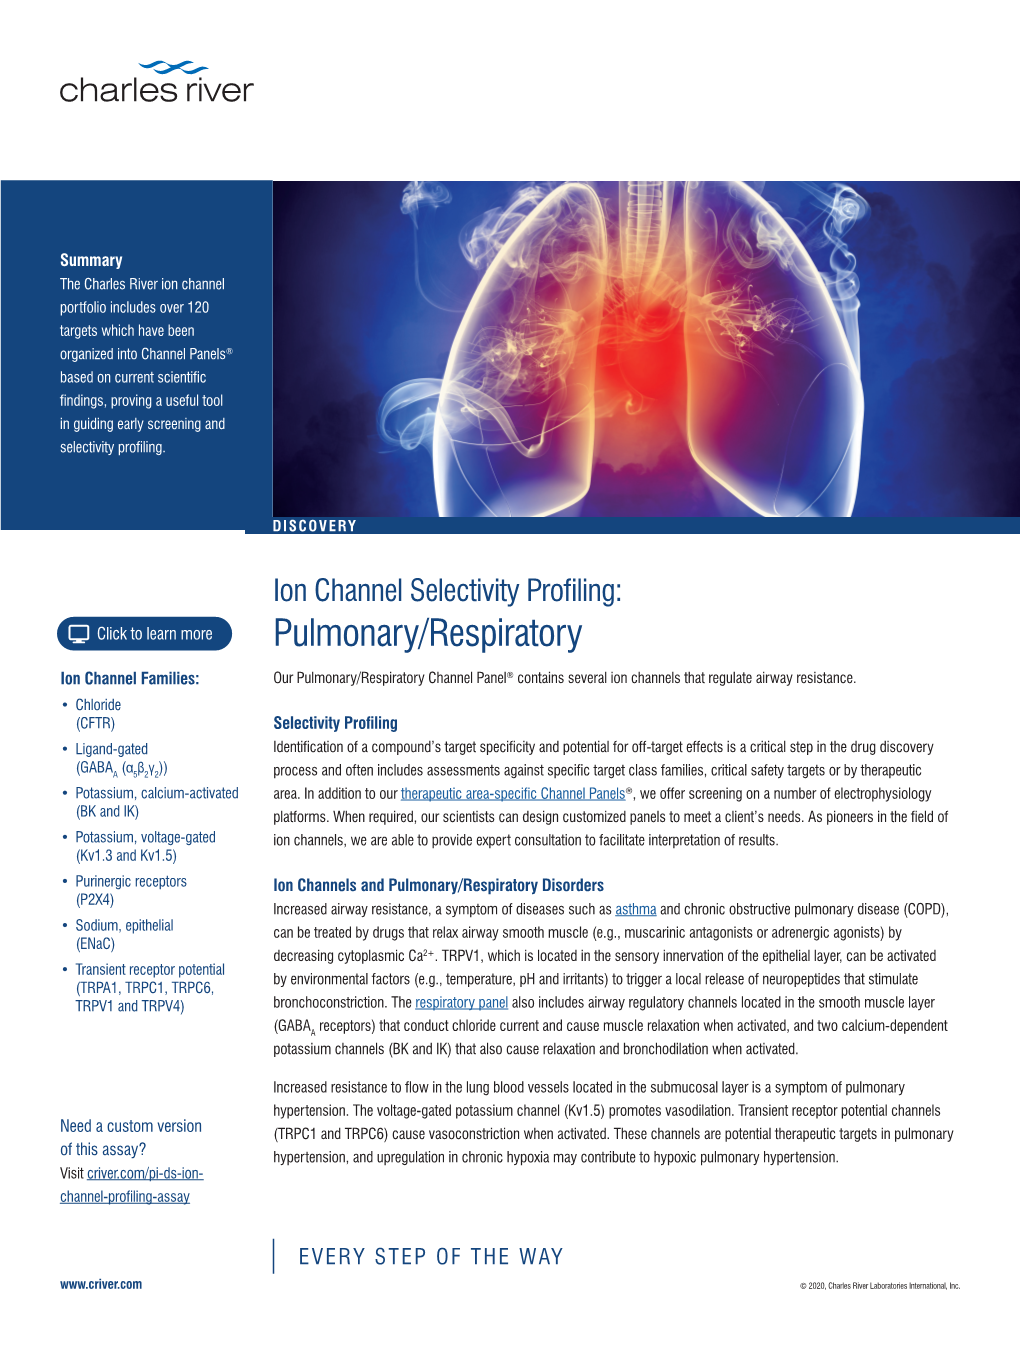 Ion Channel Selectivity Profiling: Pulmonary/Respiratory